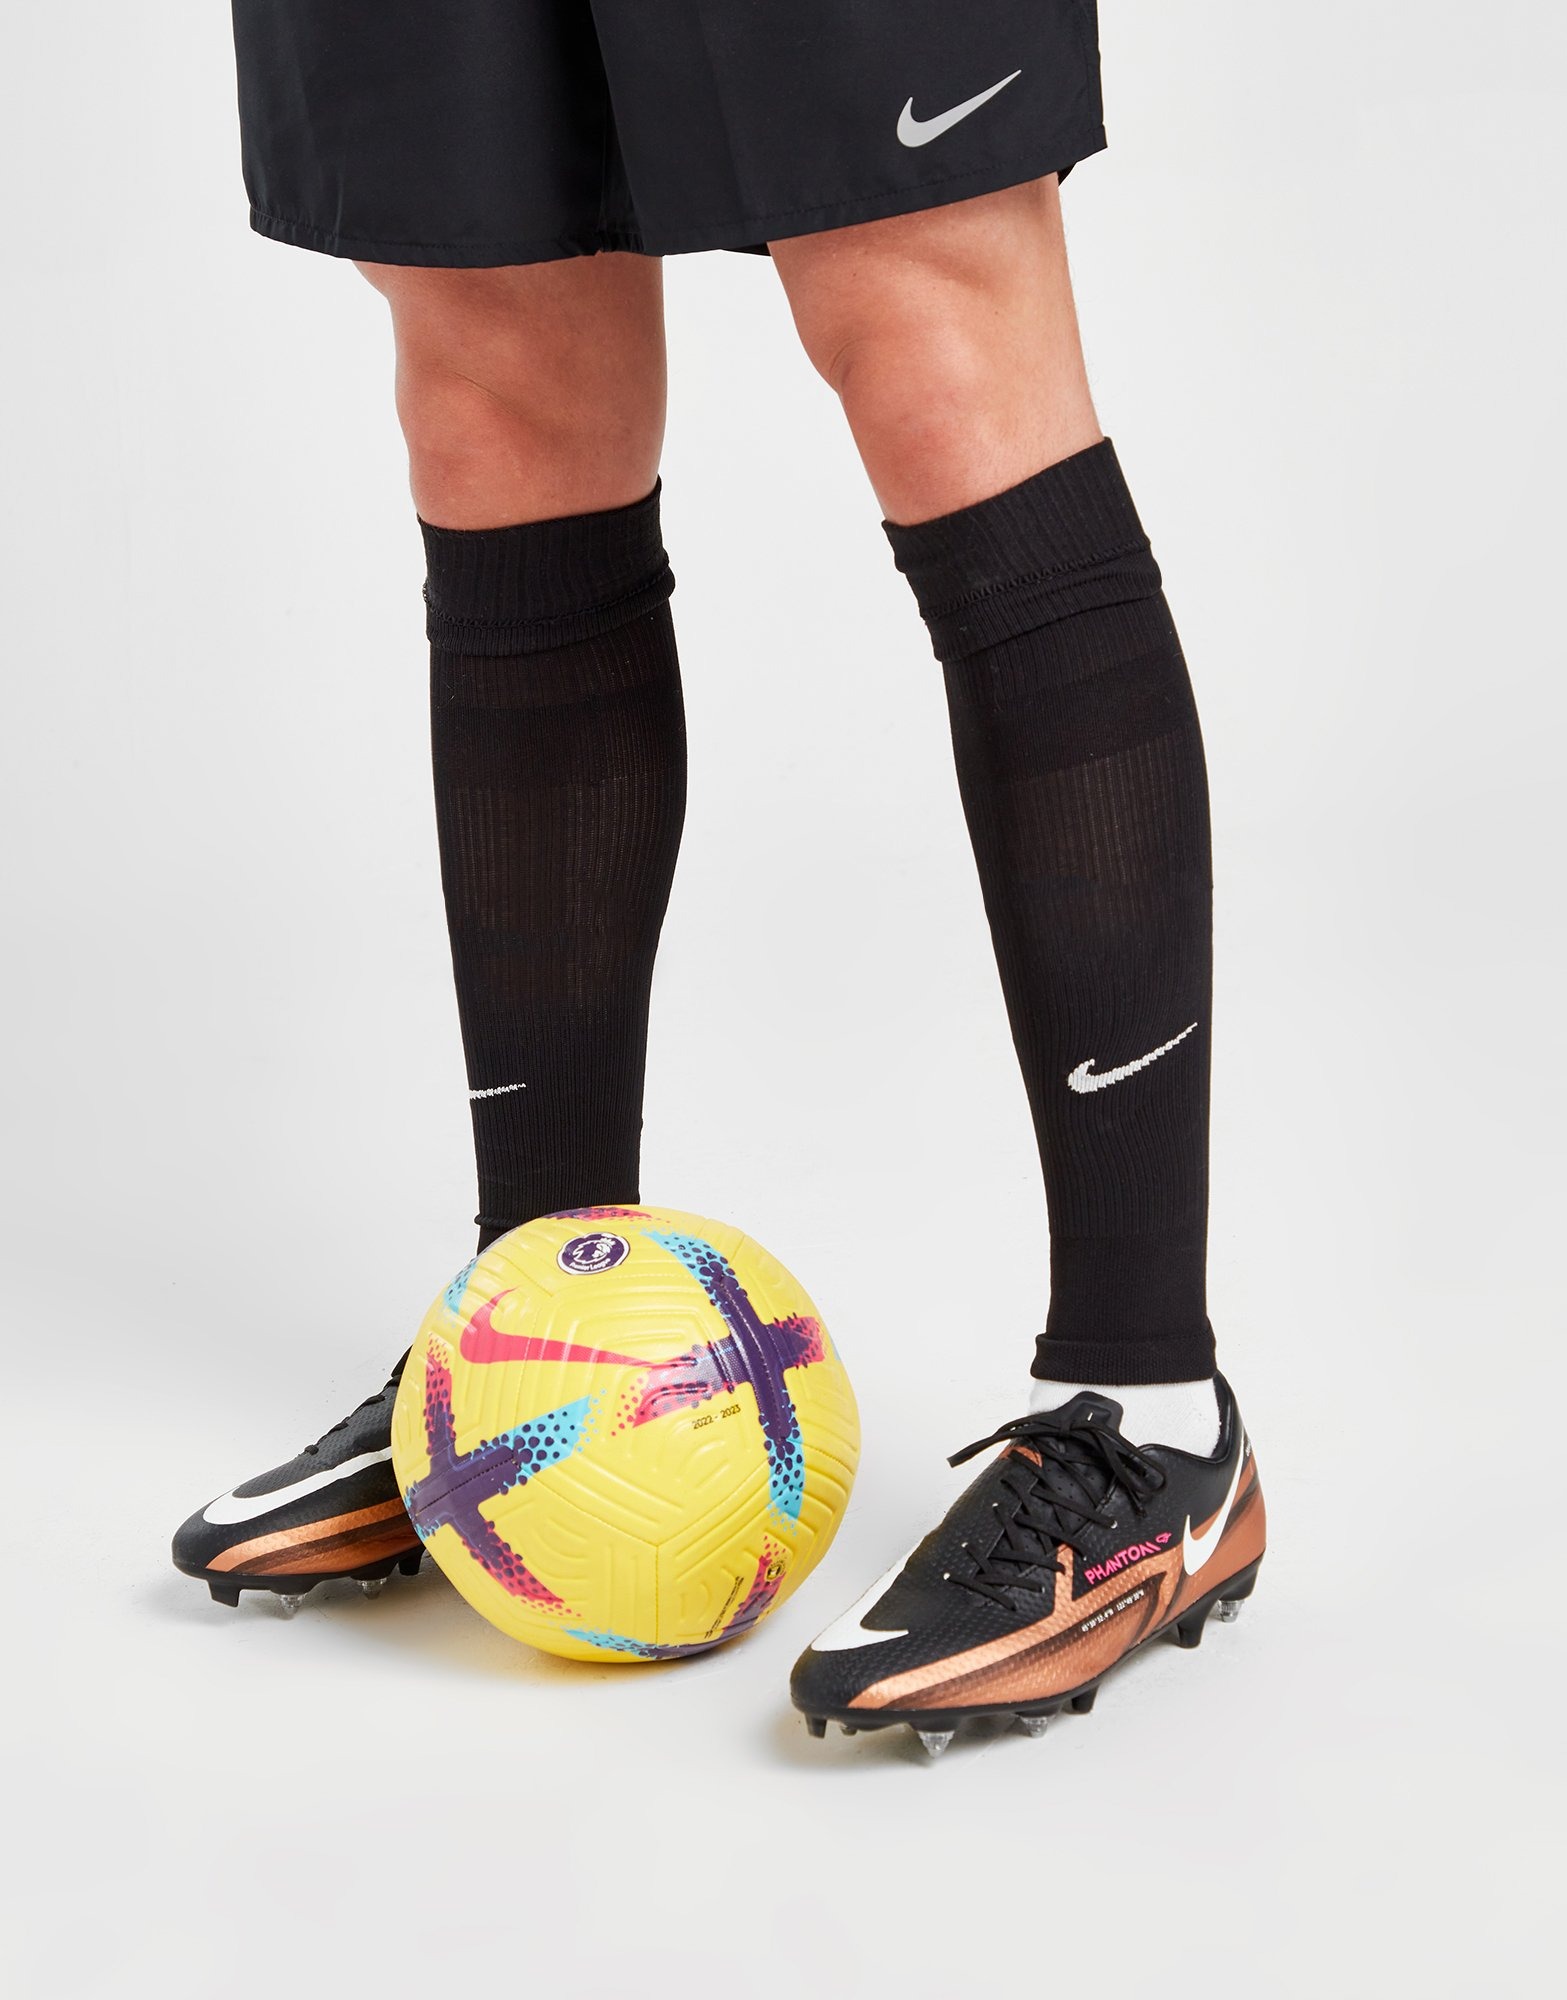 Nike medias de fútbol sin pie Squad en España